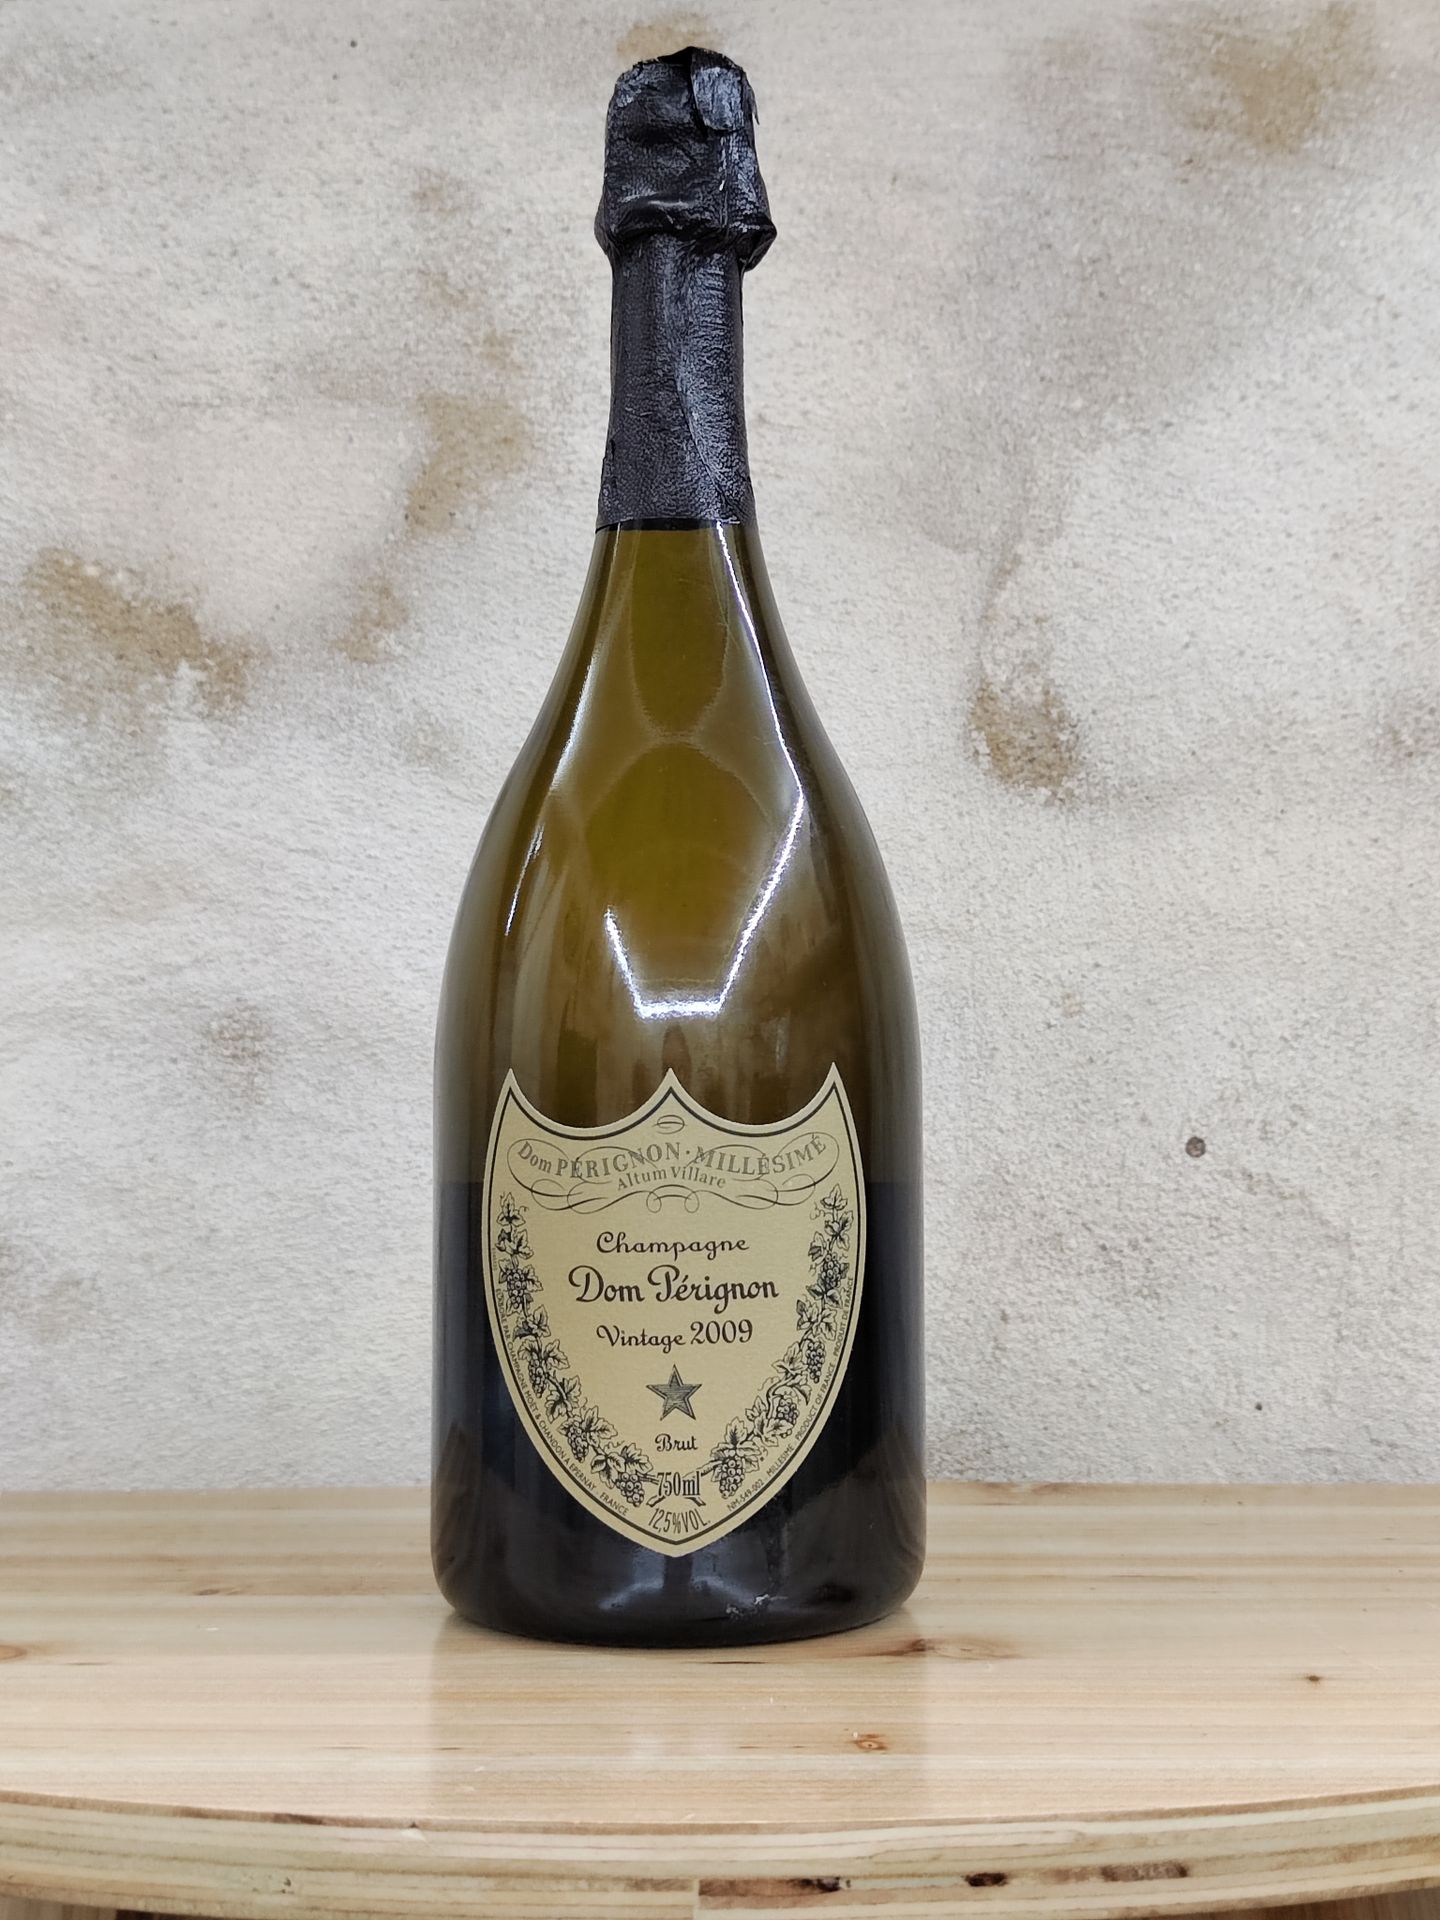 Null 1 bottle DOM PERIGNON brut champagne, Vintage 2009.
In box.